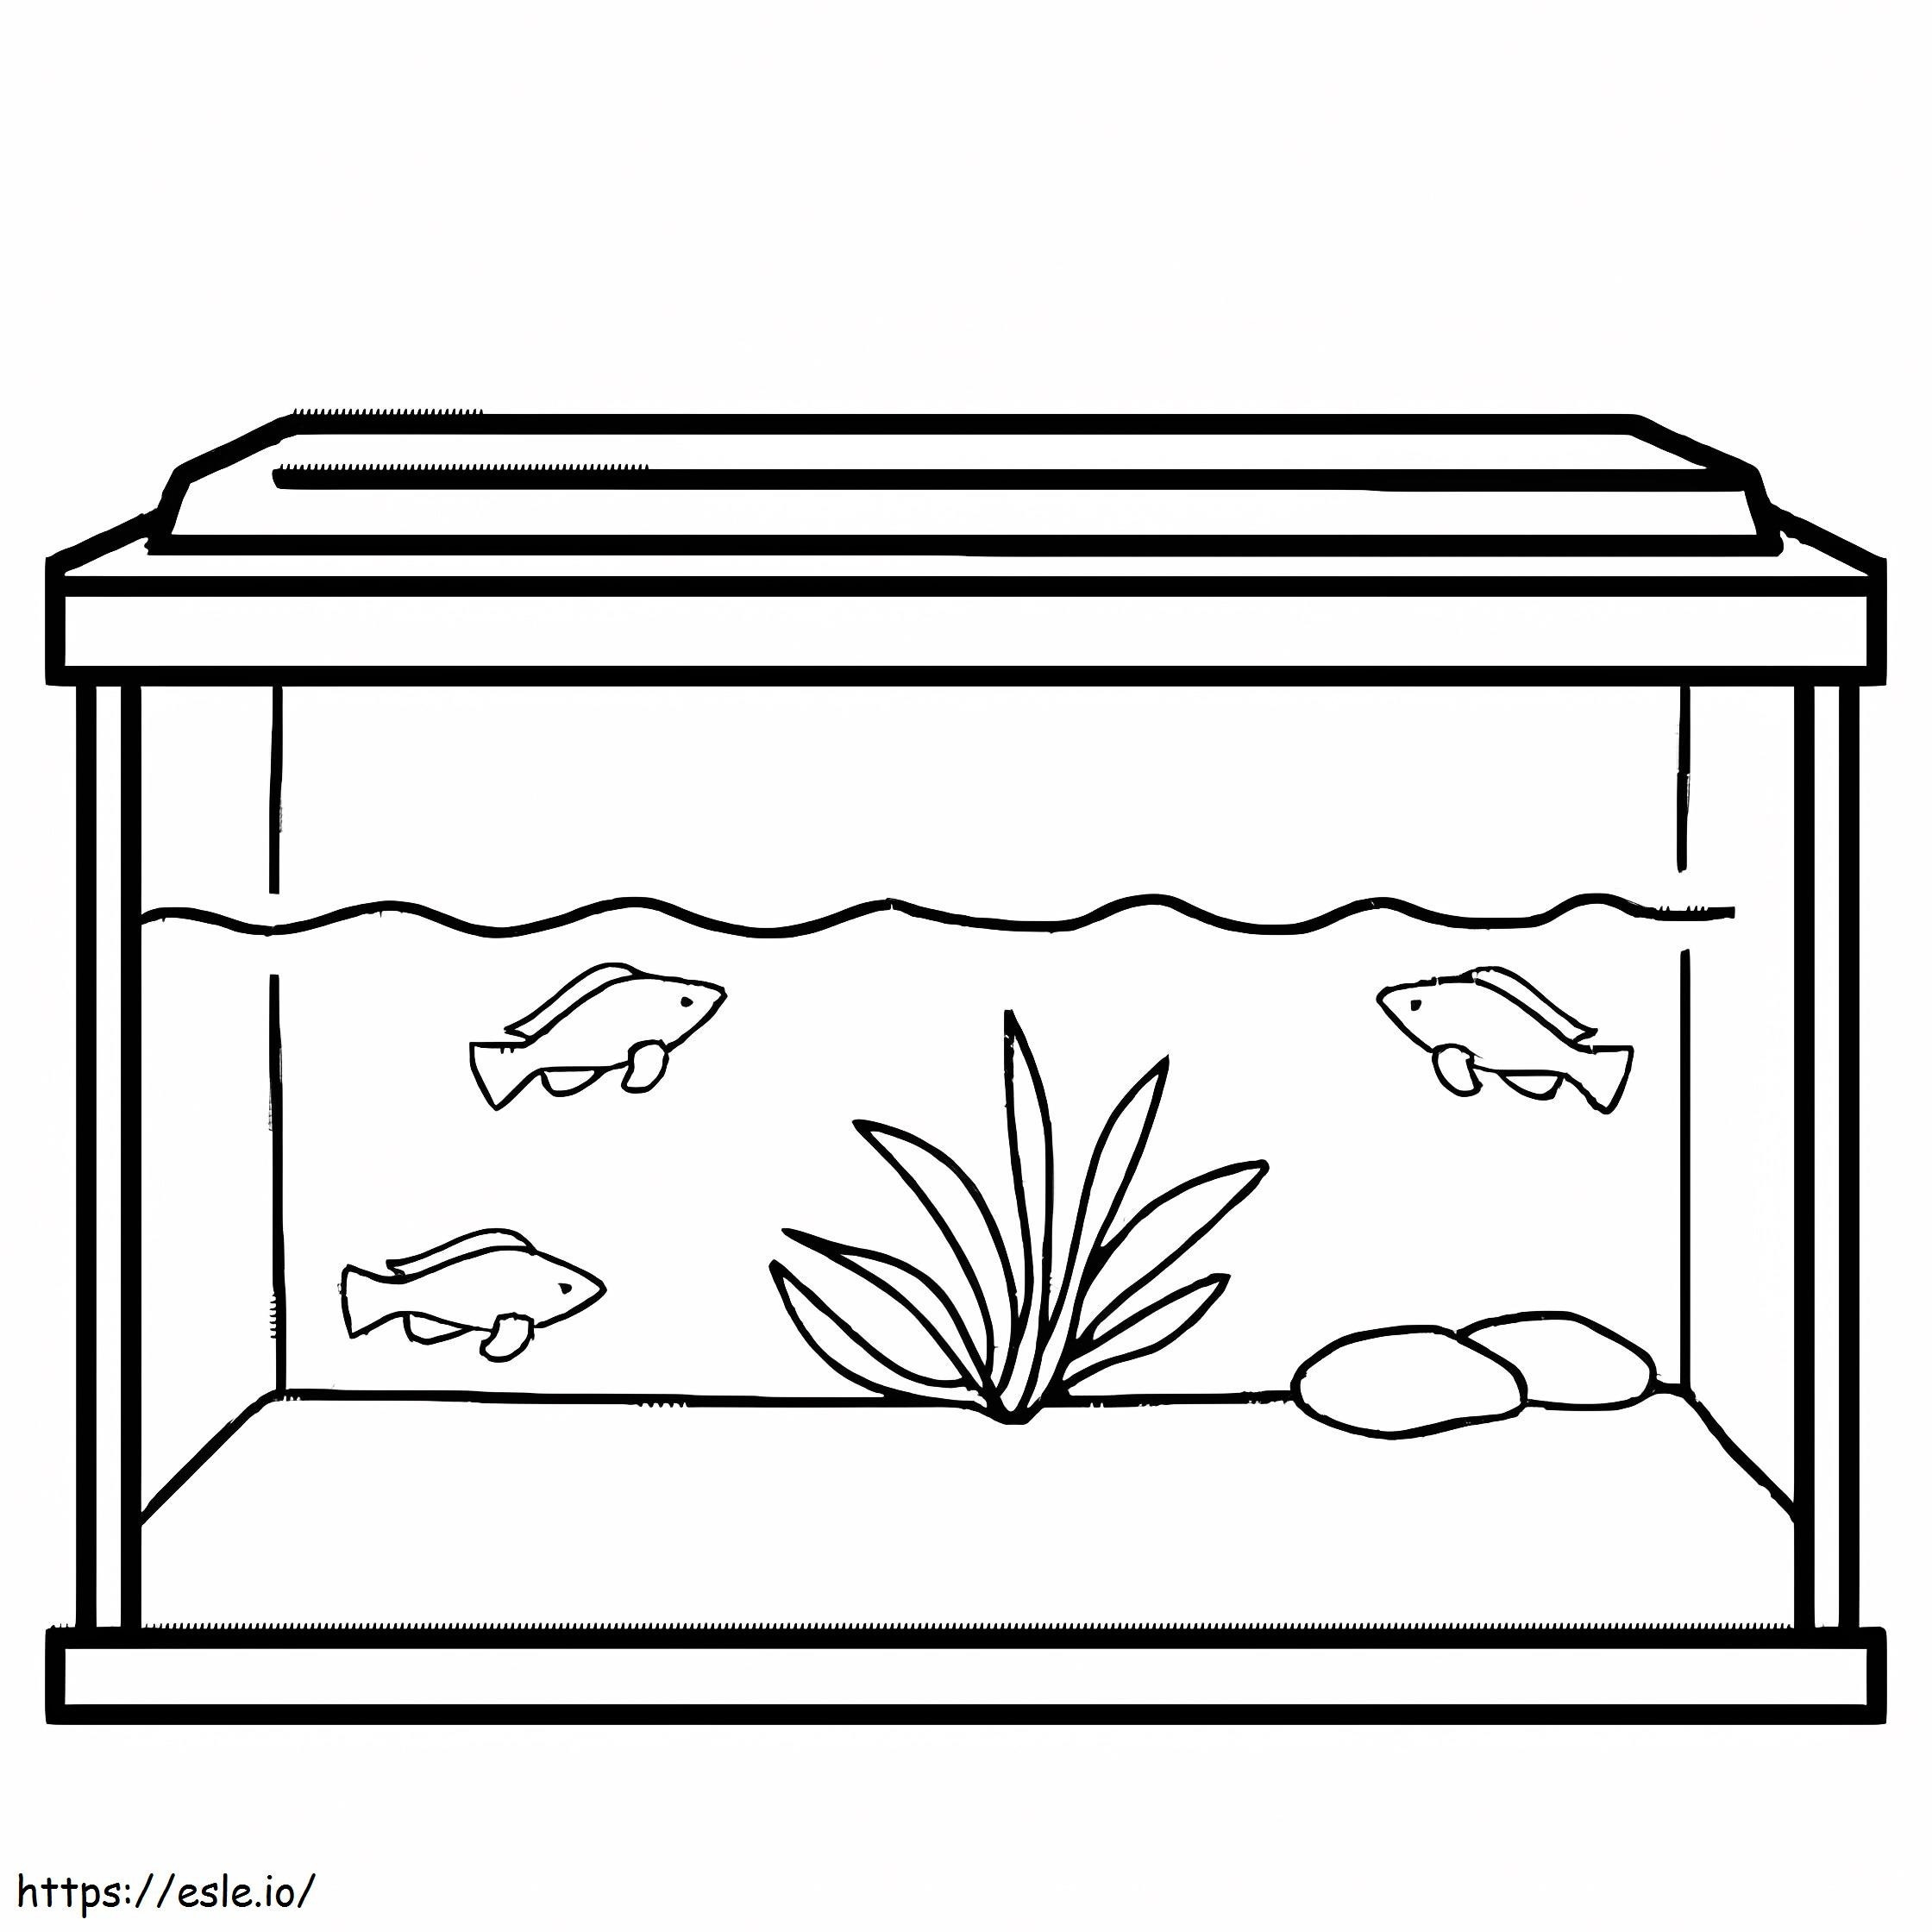 Fish Tank 1 coloring page